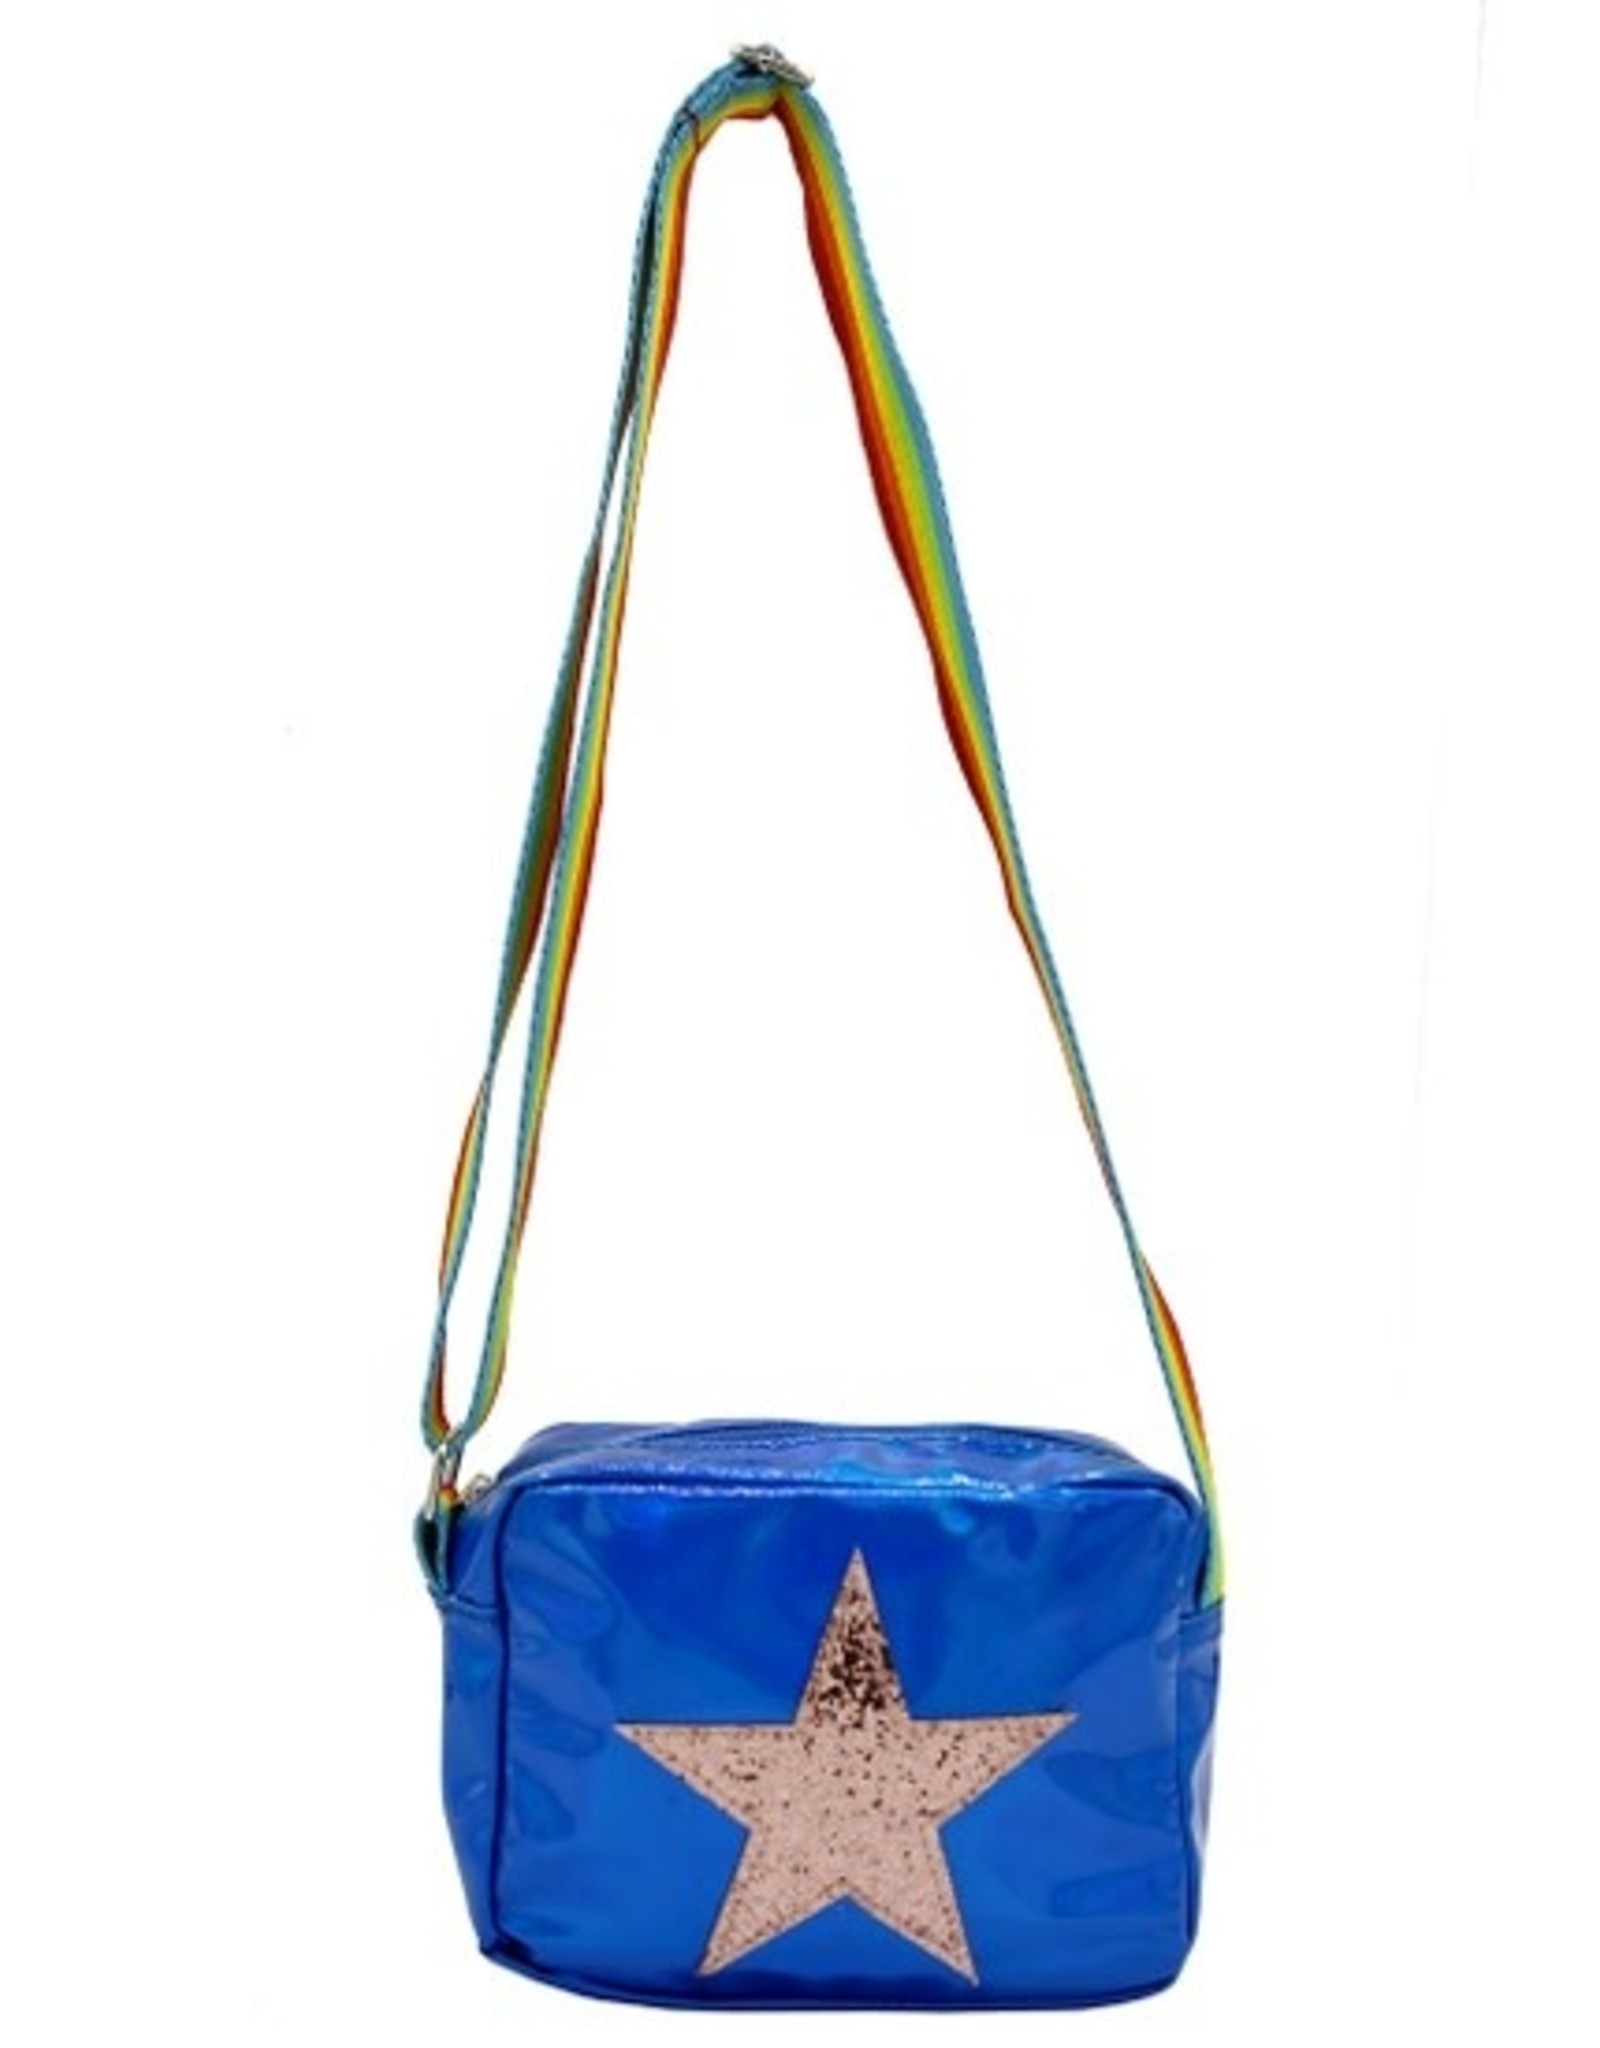 Star Purse with Rainbow Straps - Blue